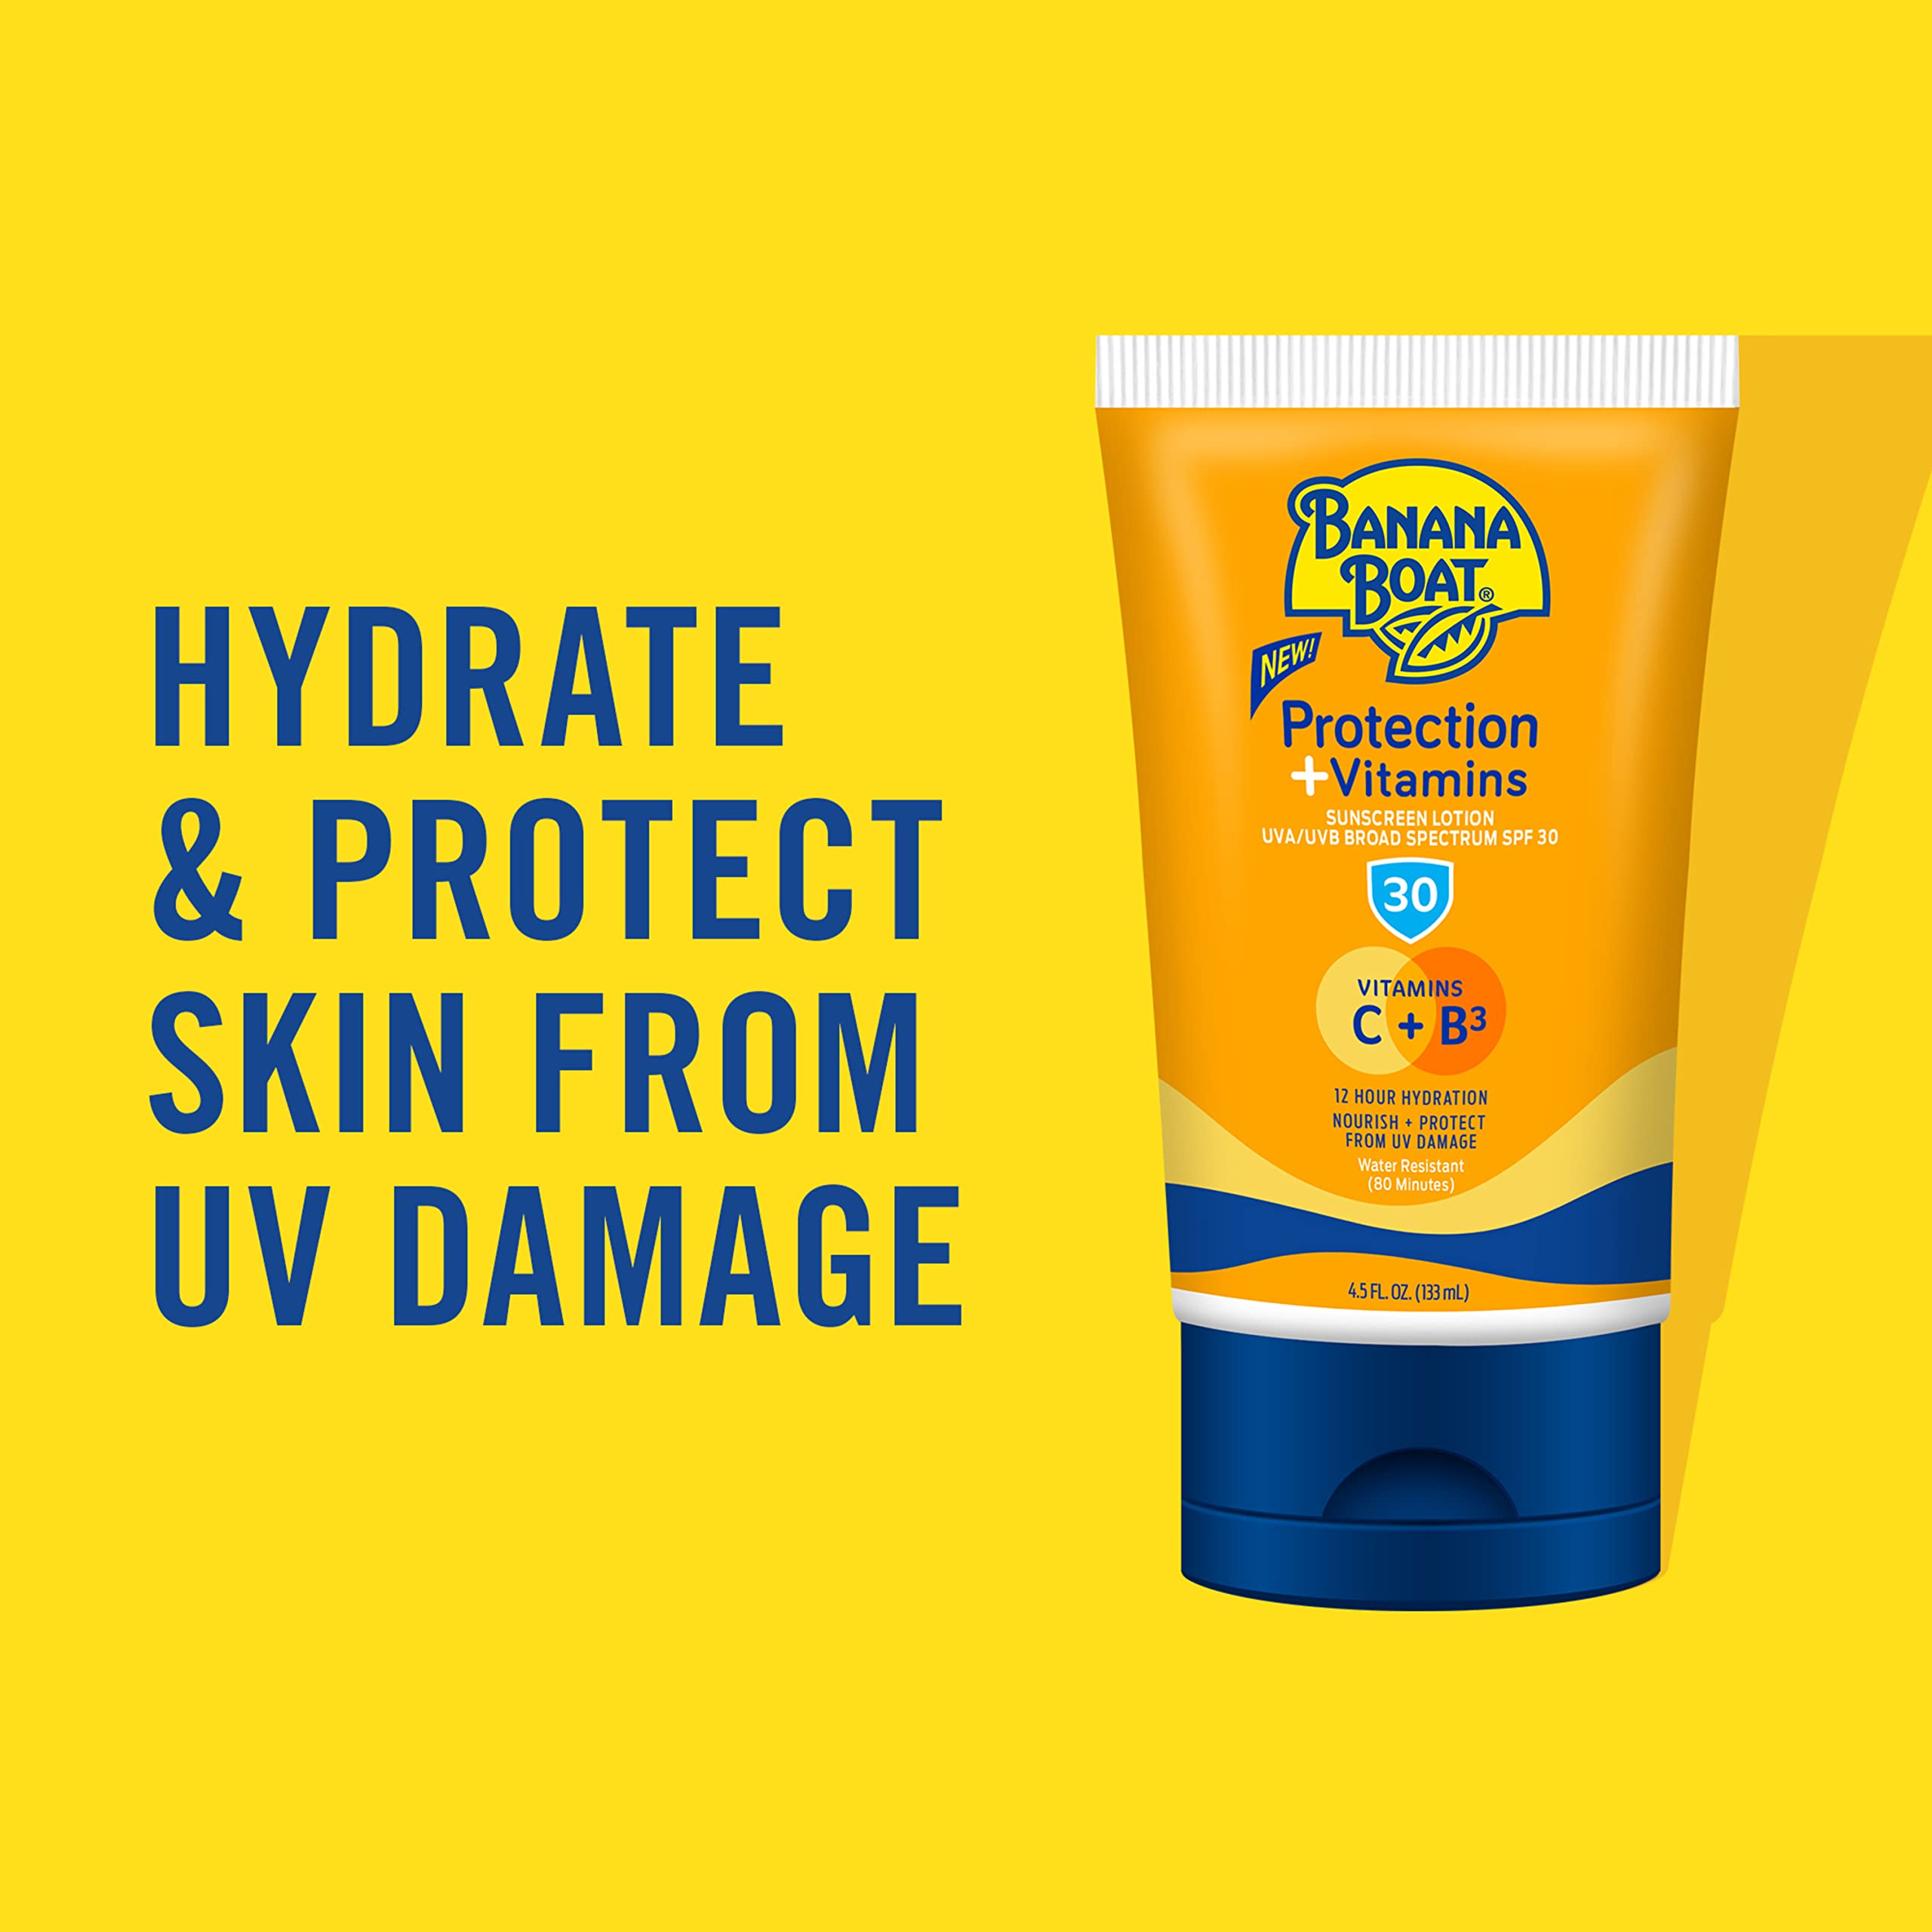 Banana Boat Protection + Vitamins Sunscreen Lotion SPF 30 | Moisturizing Sunscreen with Vitamin C & B3 | Banana Boat Vitamin C Lotion Sunscreen, Vitamin B3 & Vitamin C Sunscreen, 4.5 oz.